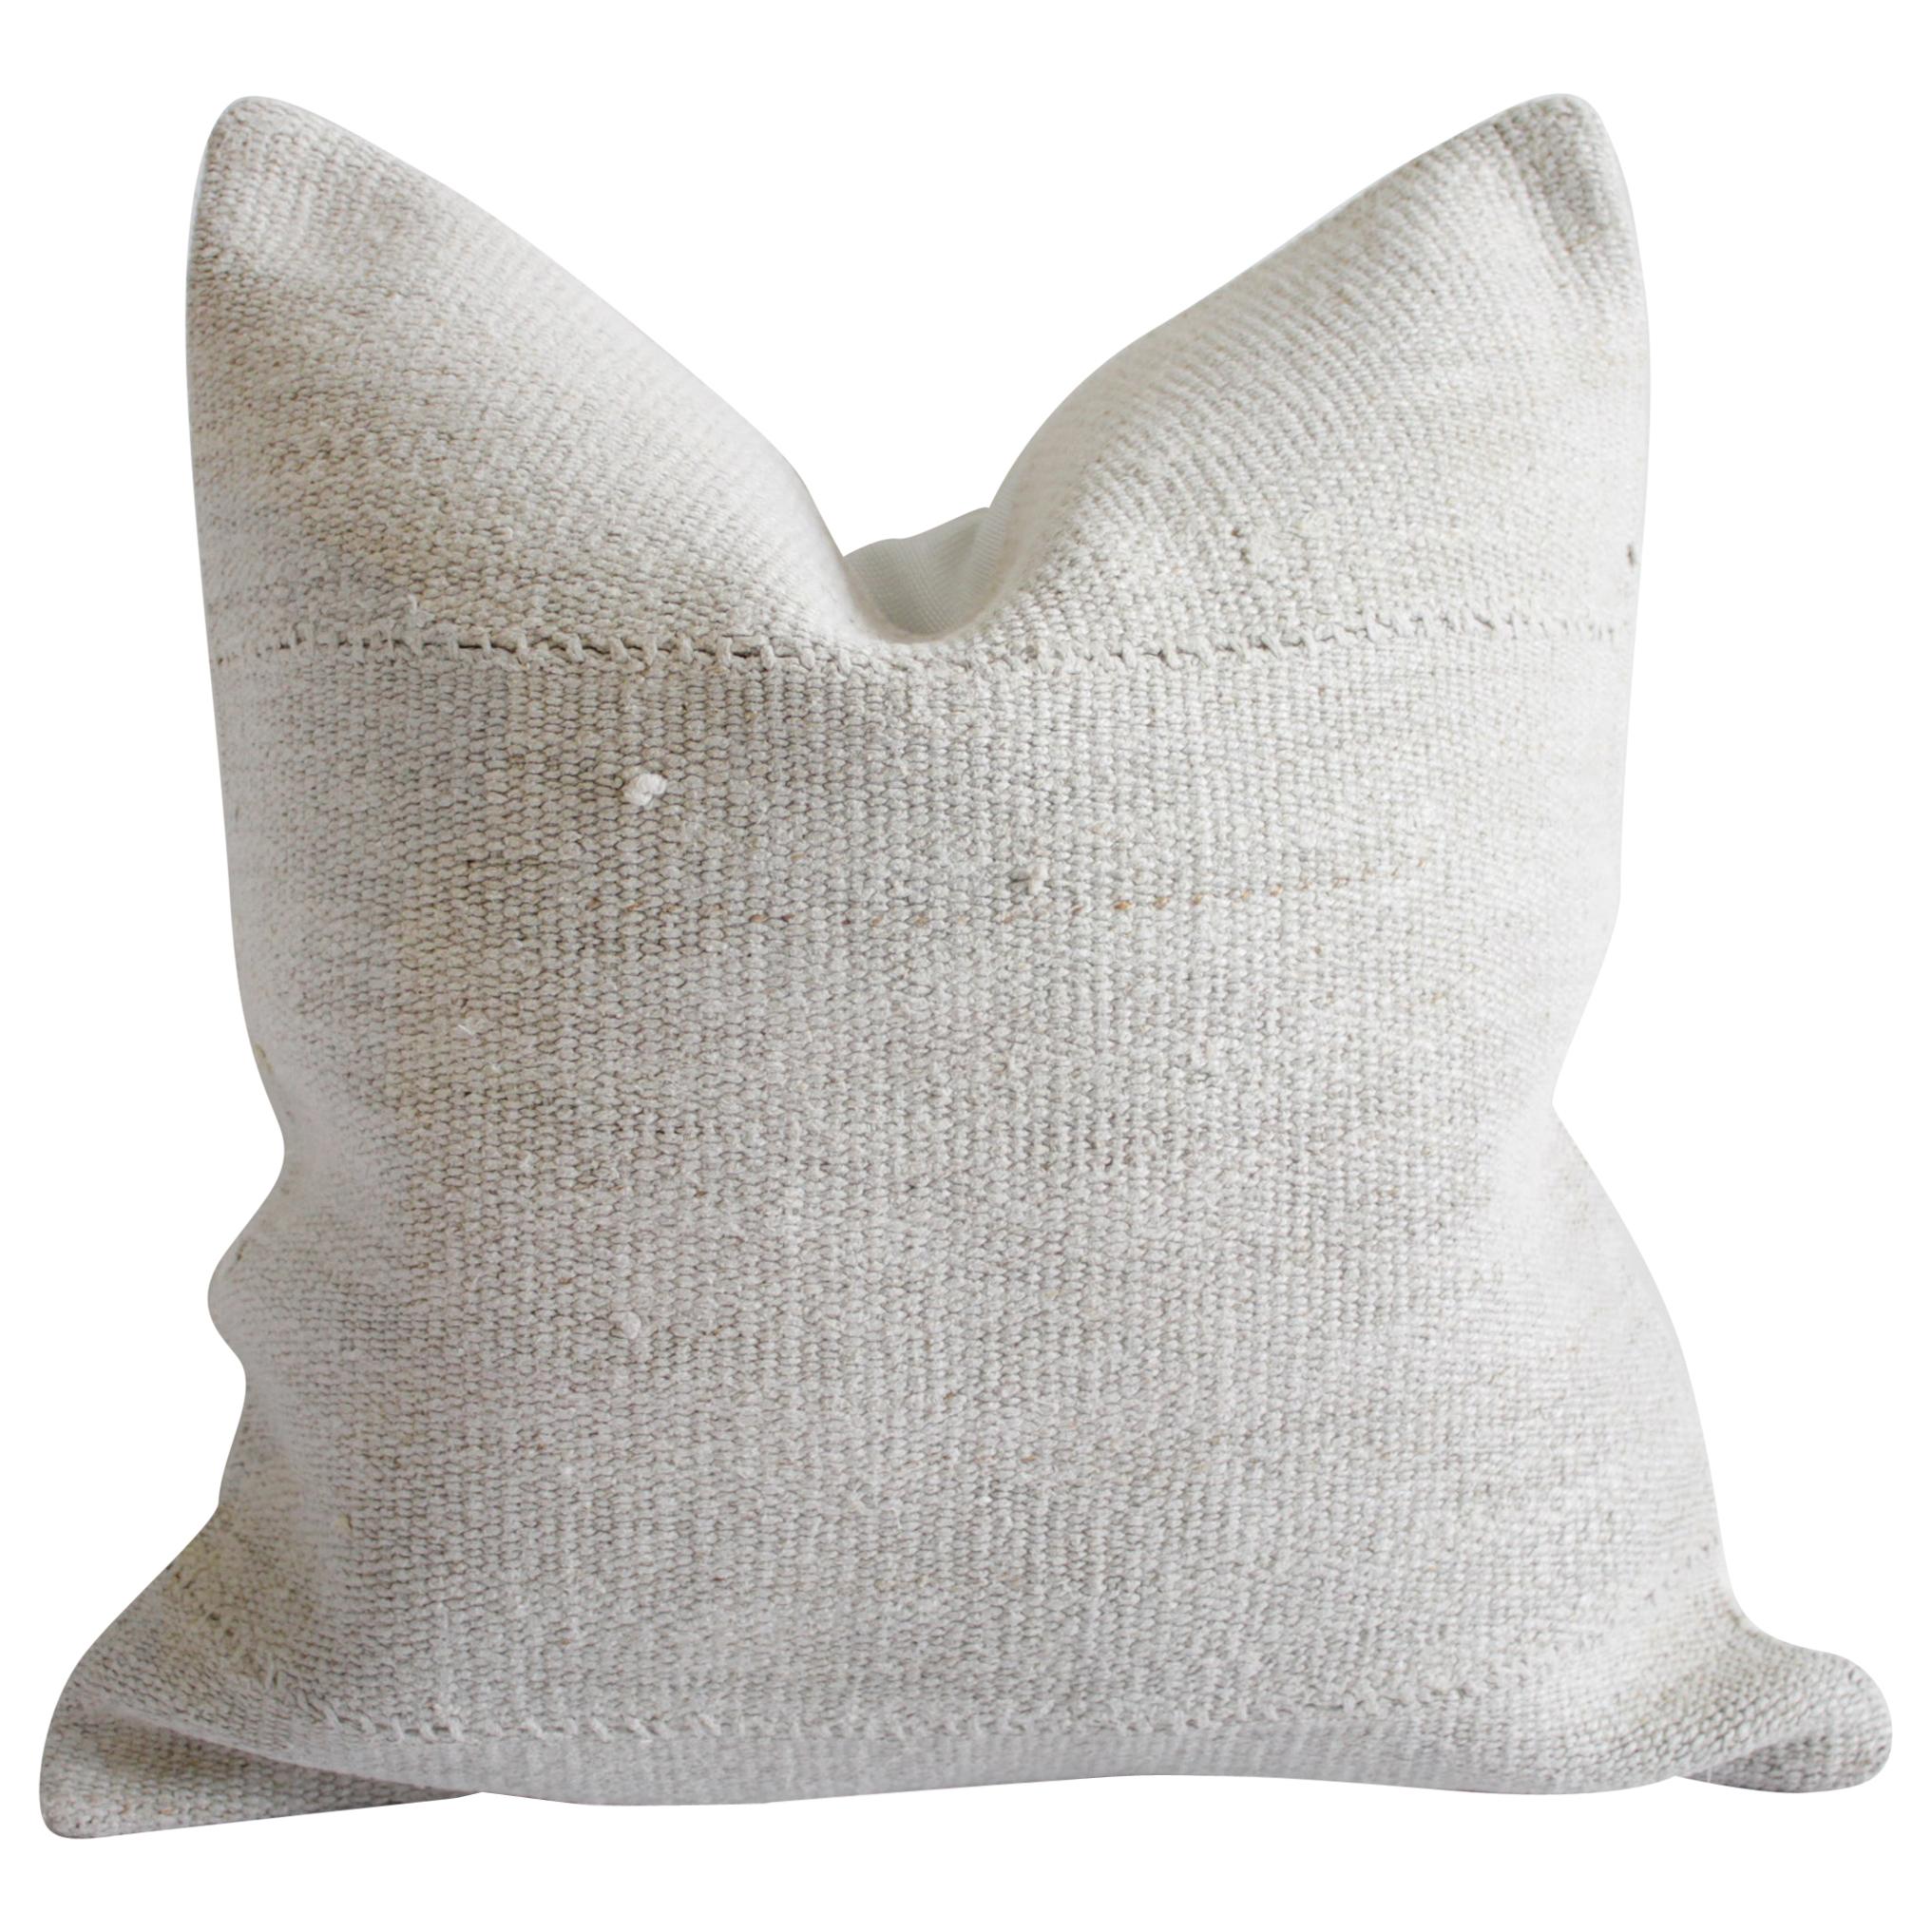 Vintage Nubby White Handwoven Minimalist Style Pillow